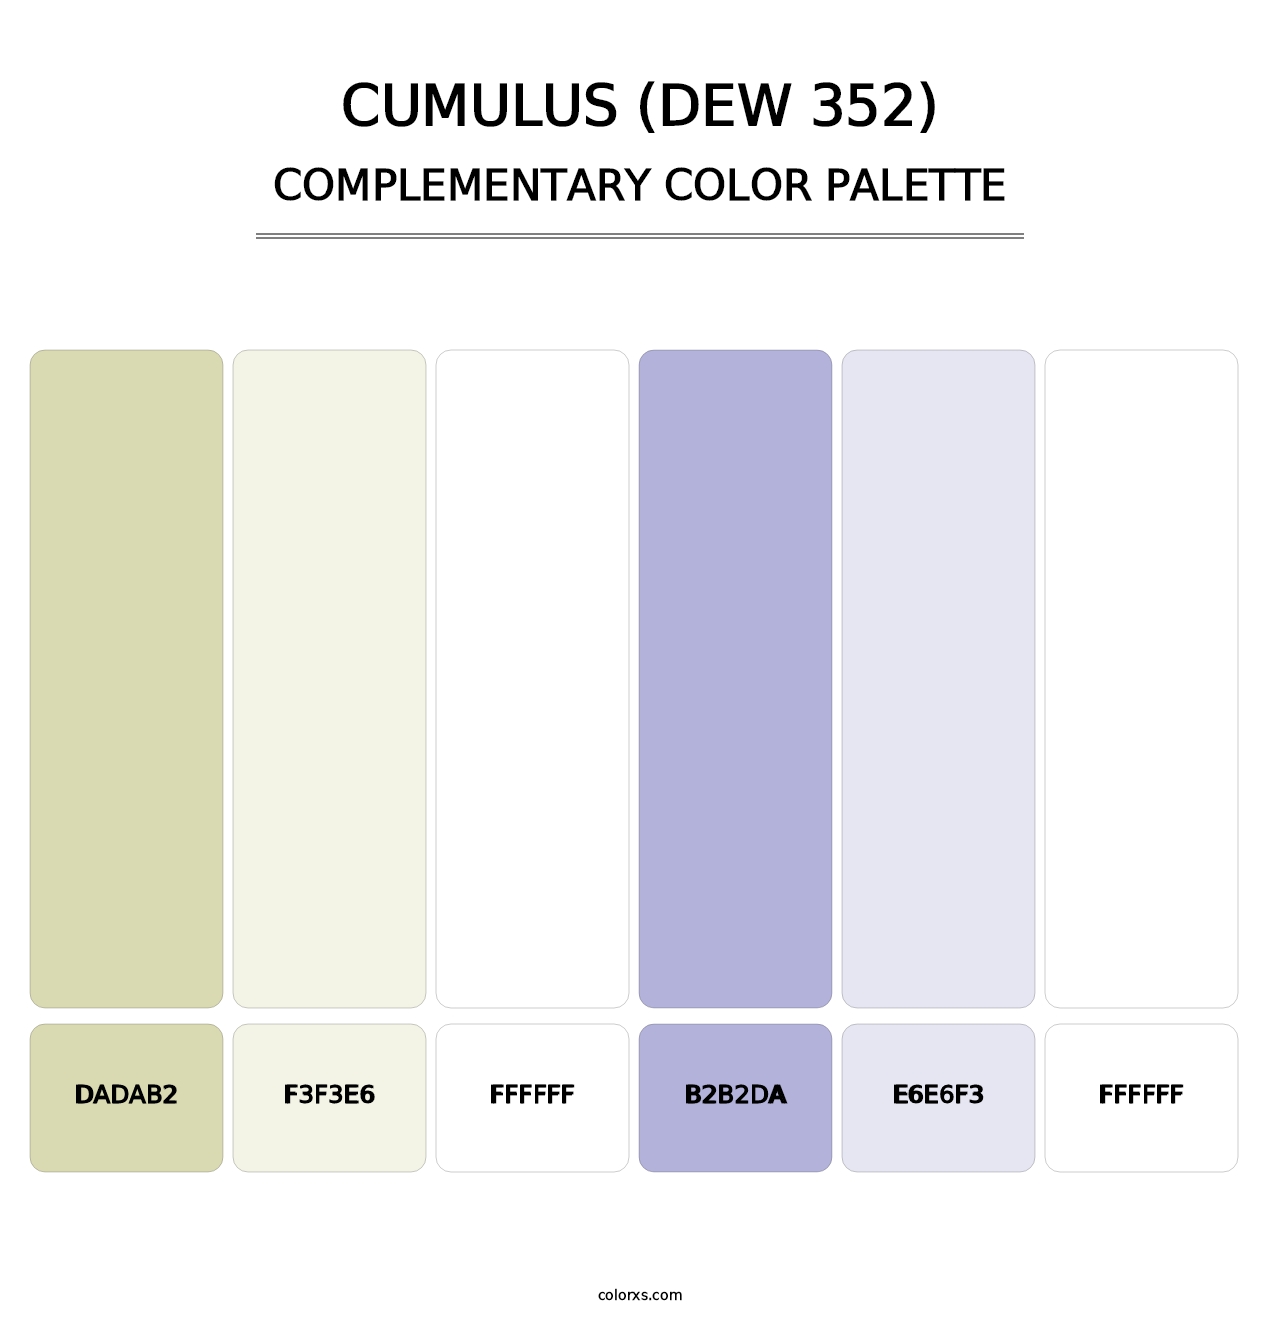 Cumulus (DEW 352) - Complementary Color Palette